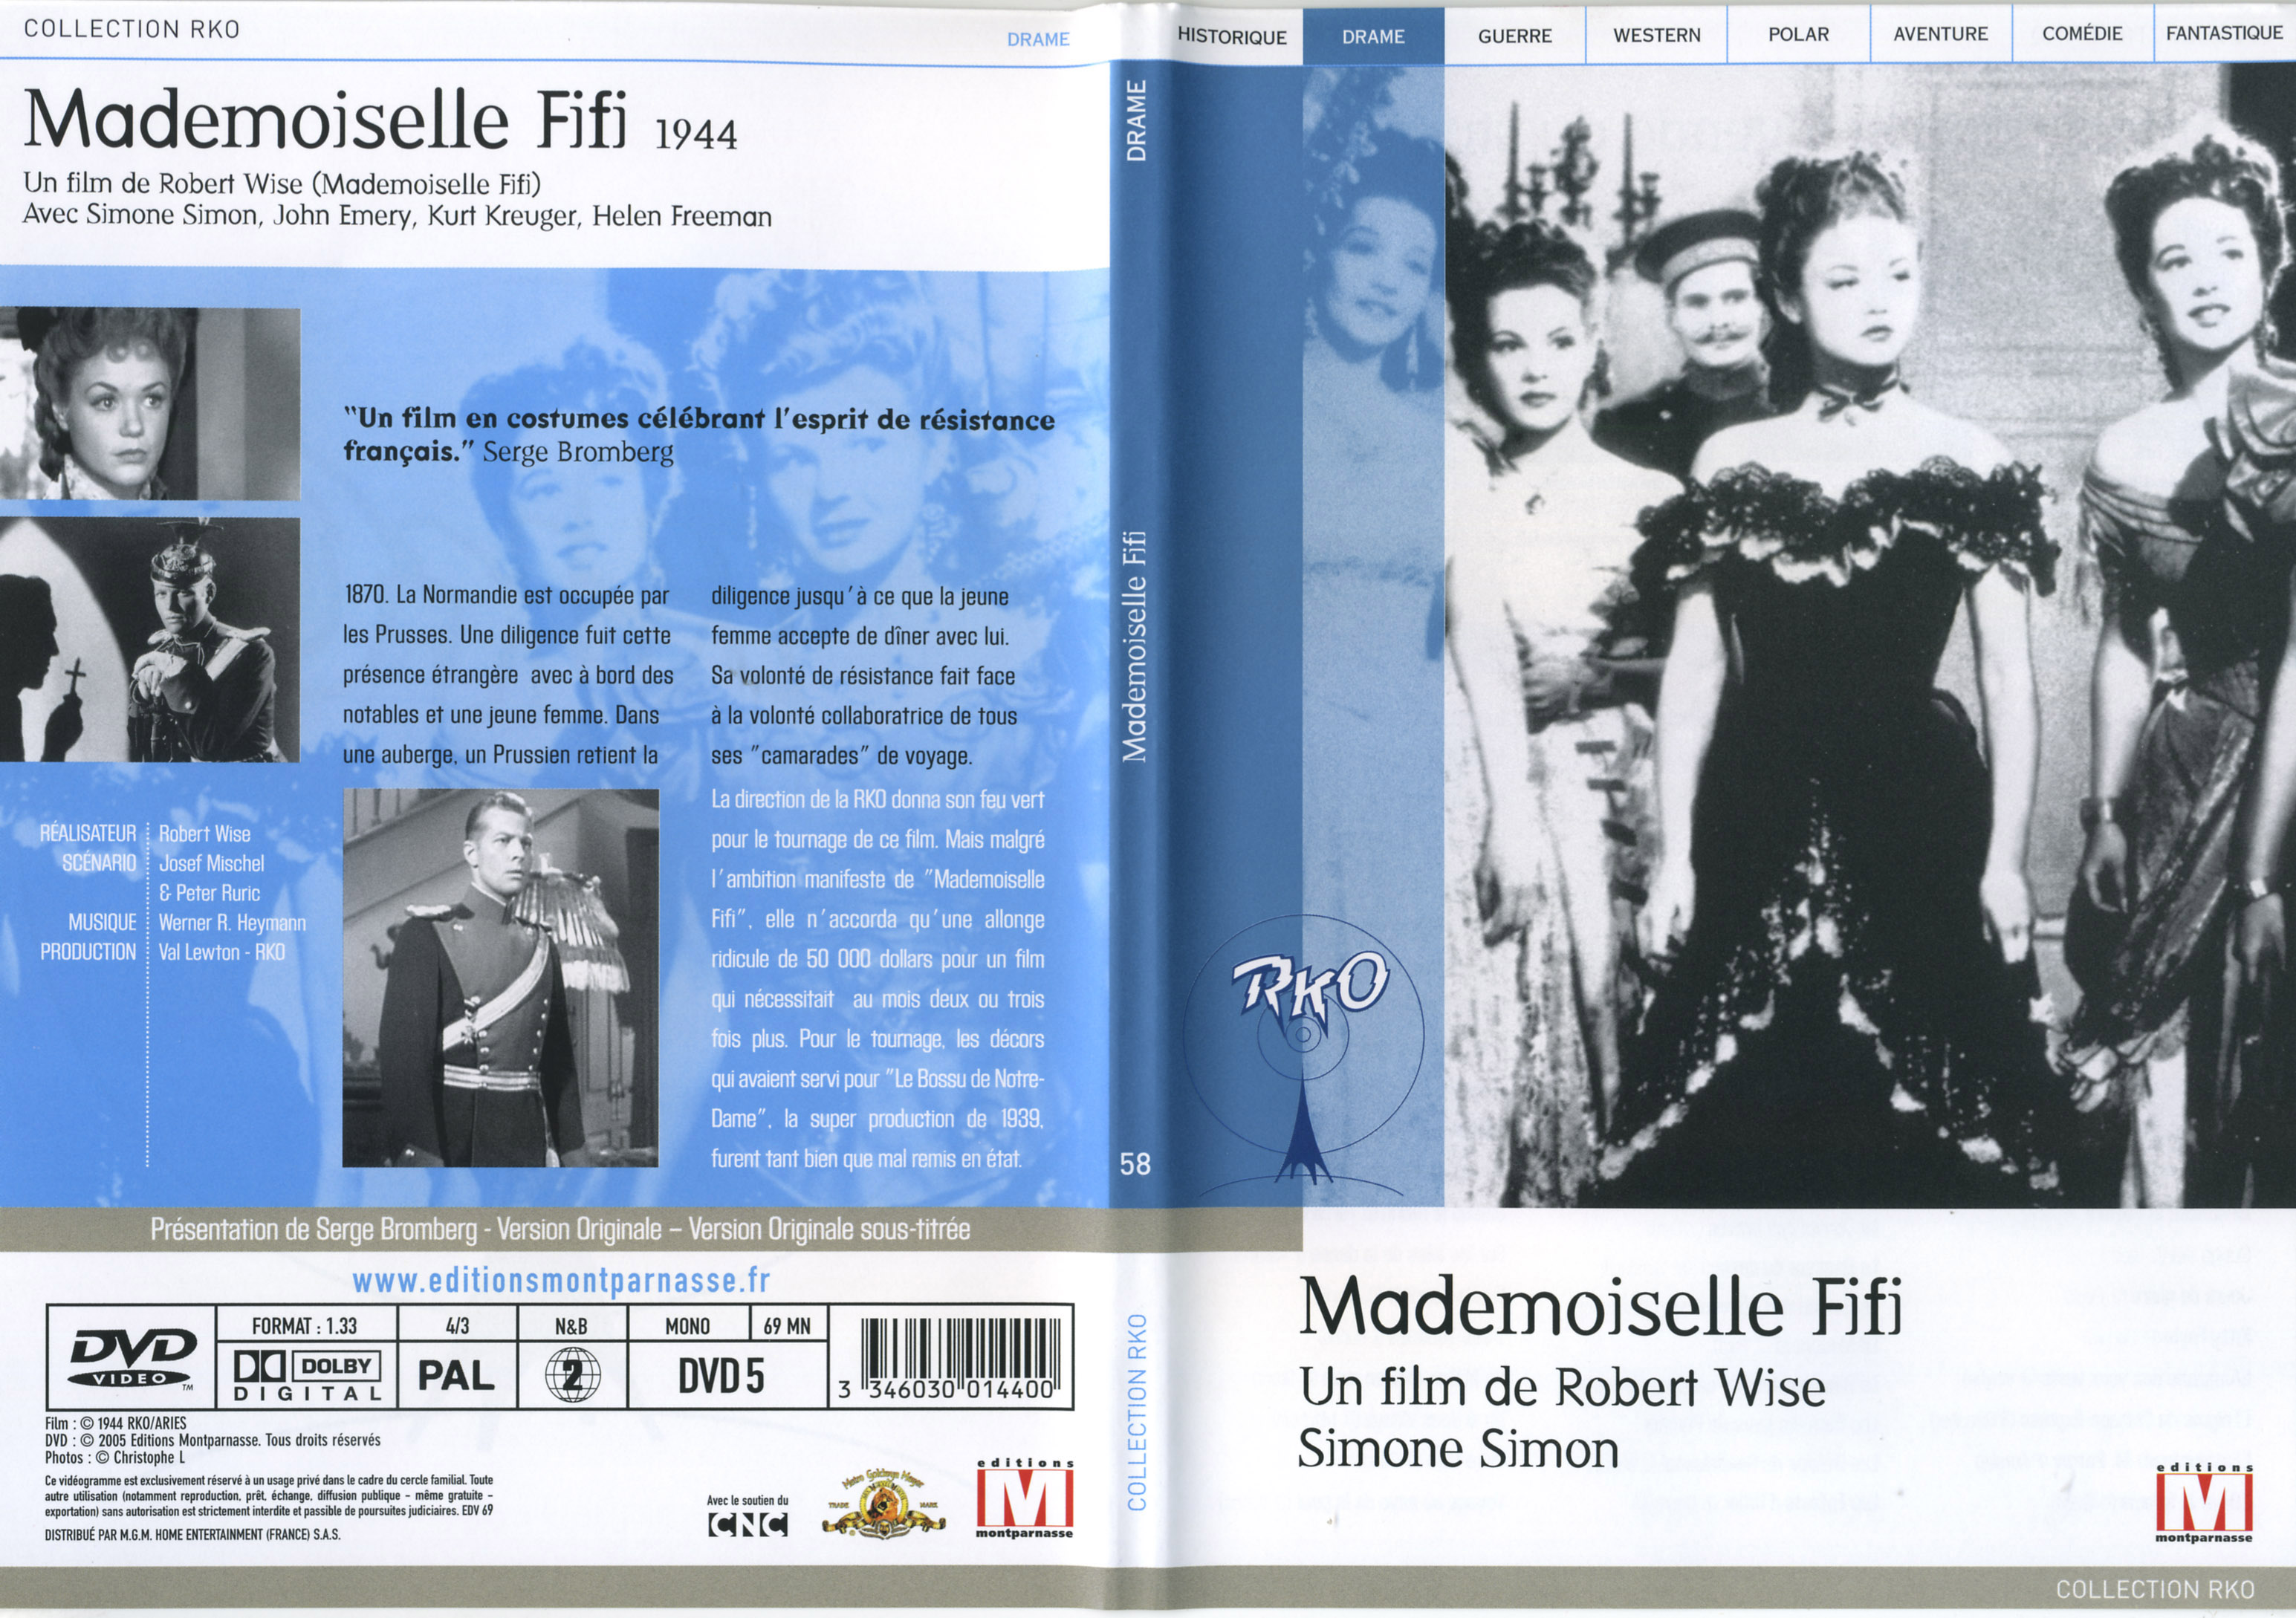 Jaquette DVD Mademoiselle Fifi